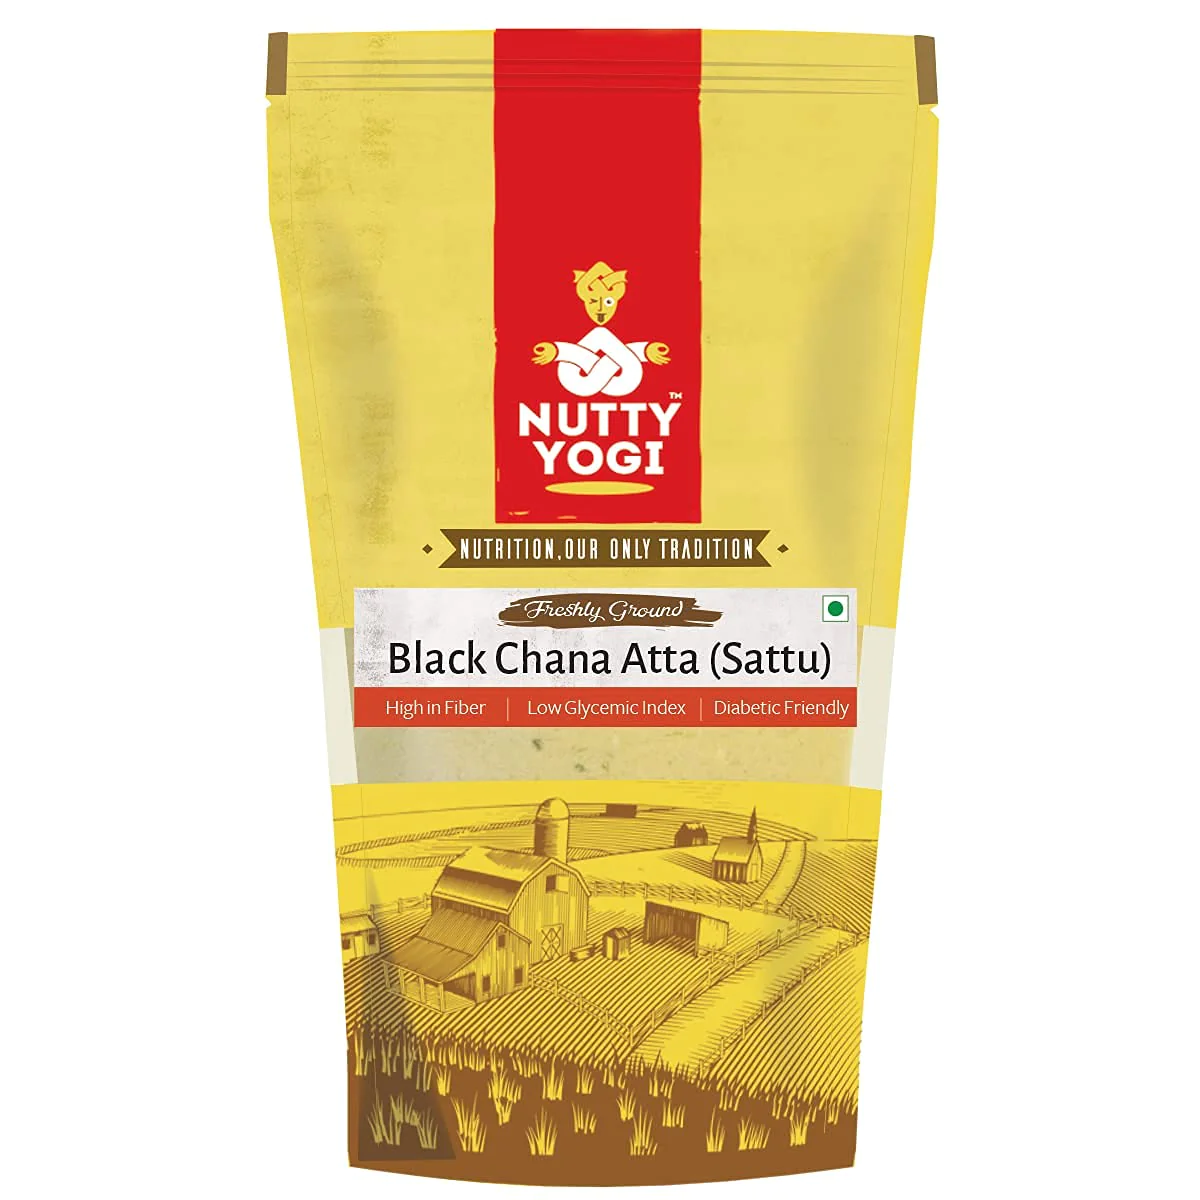 Product: Nutty Yogi Black Chana (Sattu) Atta